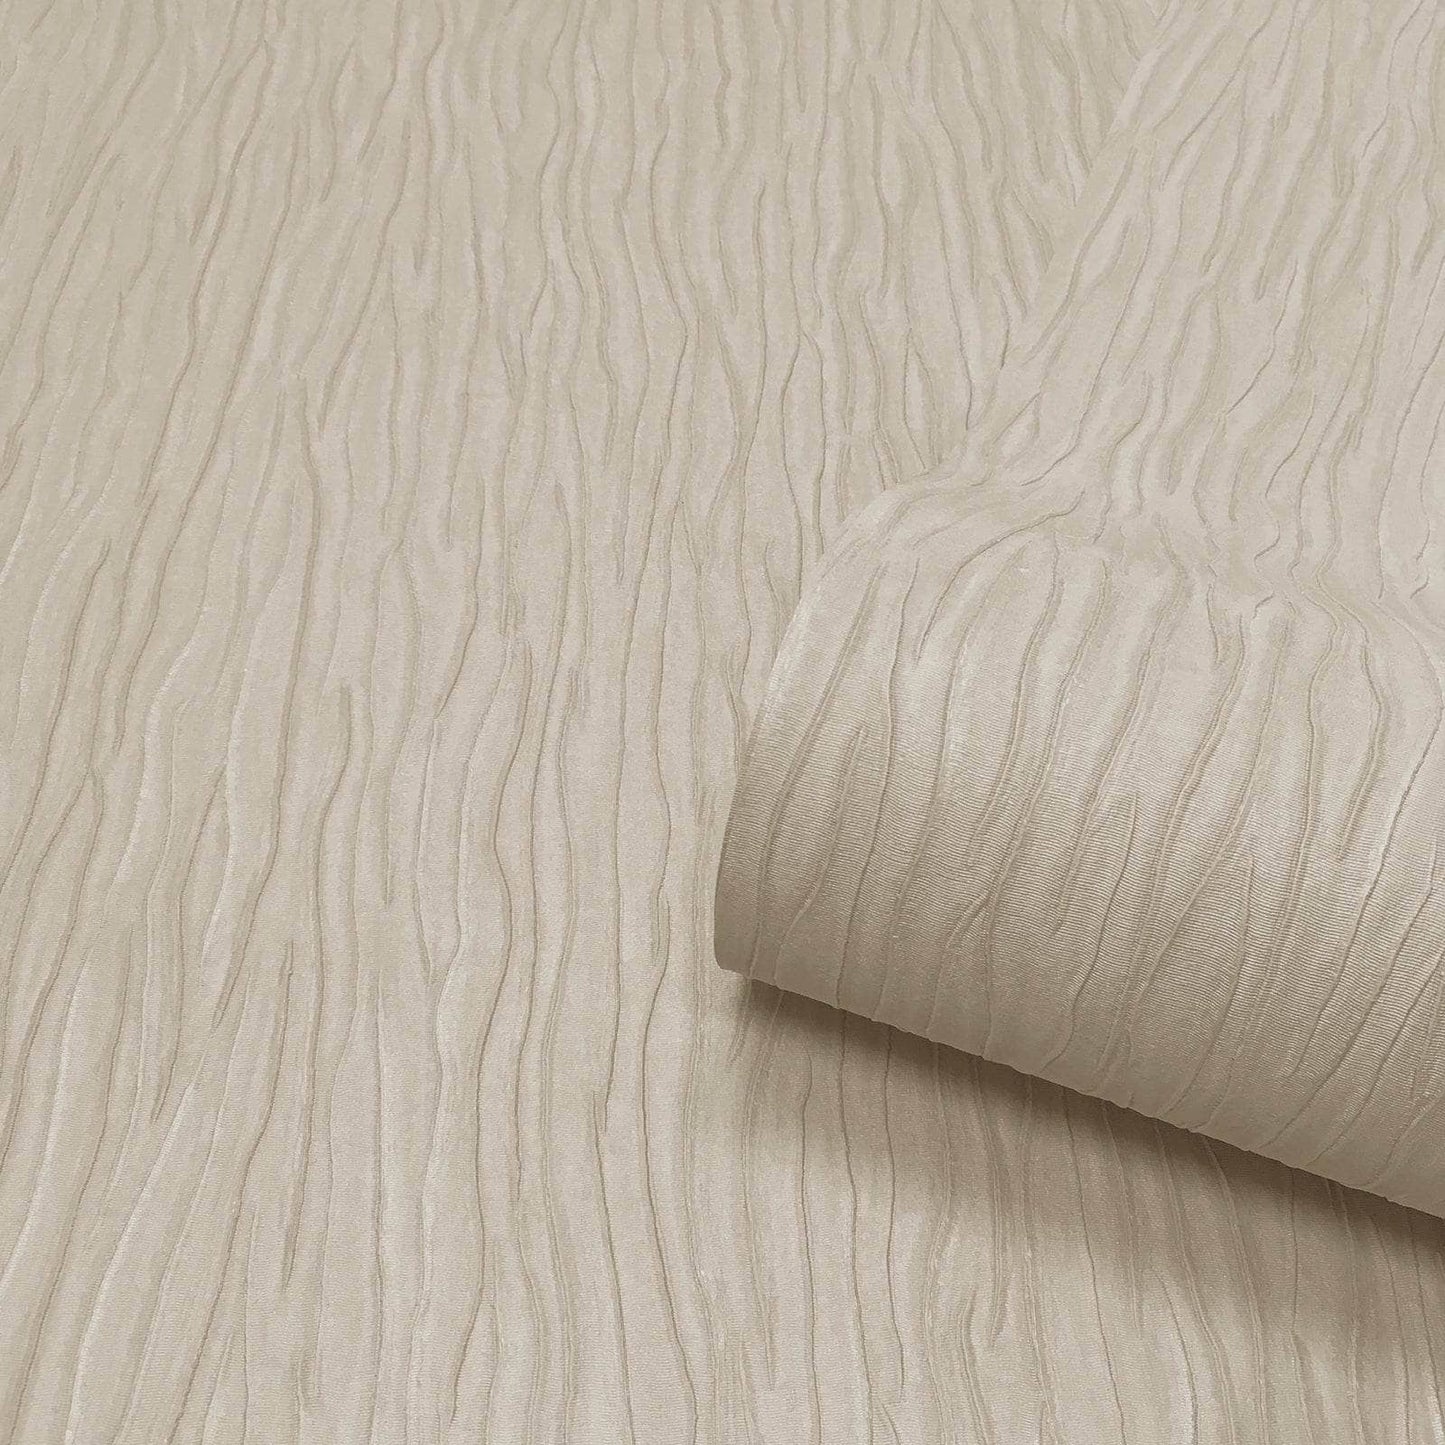 Wallpaper  -  Belgravia Tiffany Beige Texture Wallpaper - 60005514  -  60005514